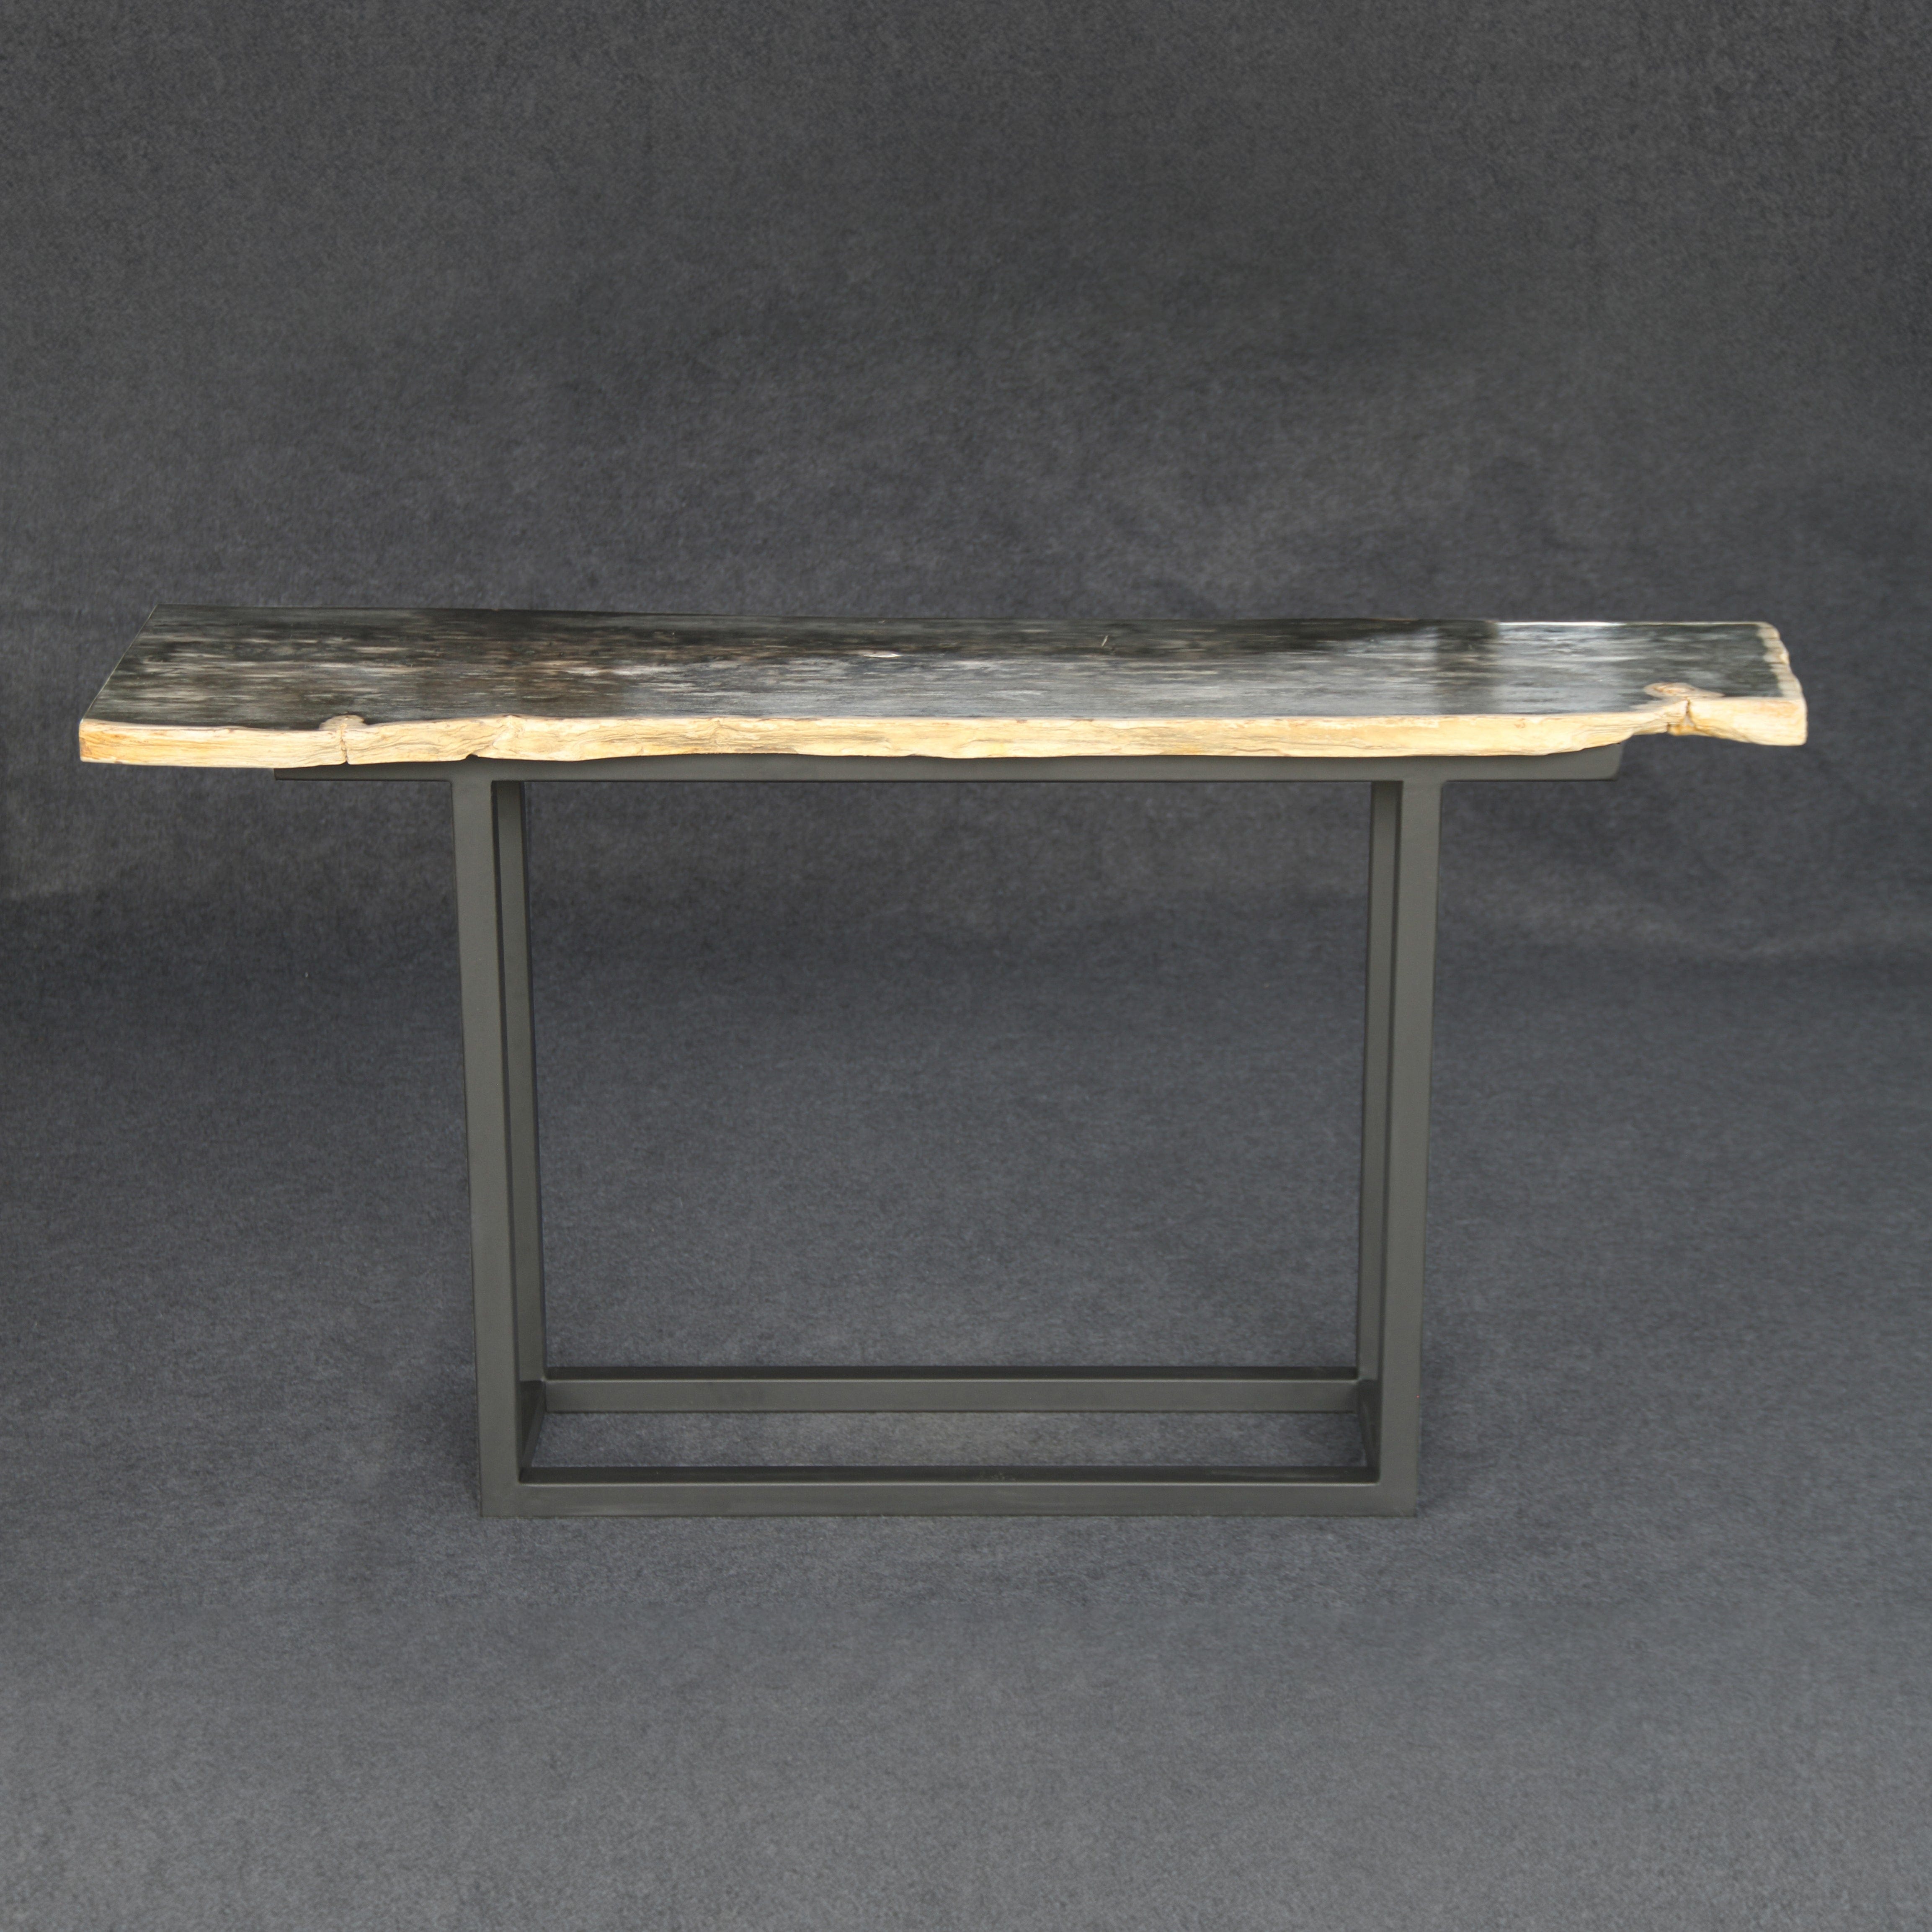 Kalifano Petrified Wood Petrified Wood Console Table 63" / 132 lbs PWR6800.004